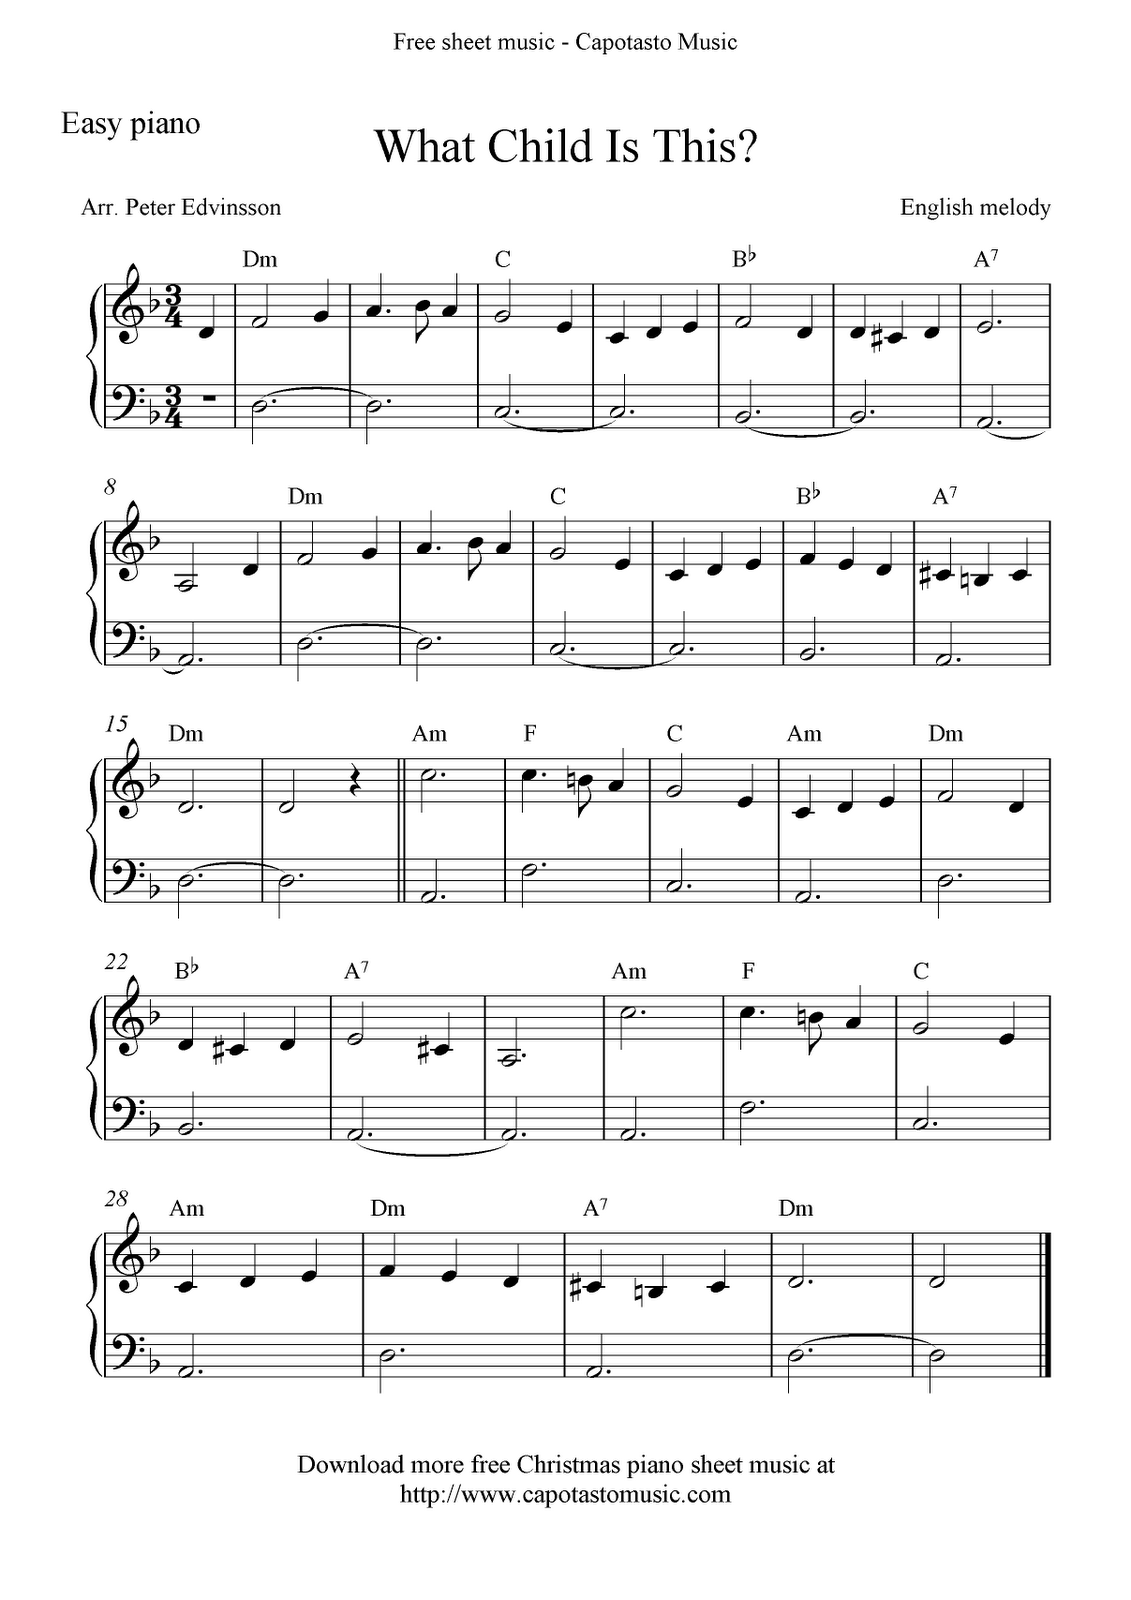 Free Sheet Music Scores Free Christmas Piano Sheet Music What Child Is This Sheet Music Piano Sheet Music Christmas Sheet Music - Free Christmas Piano Sheet Music For Beginners Printable